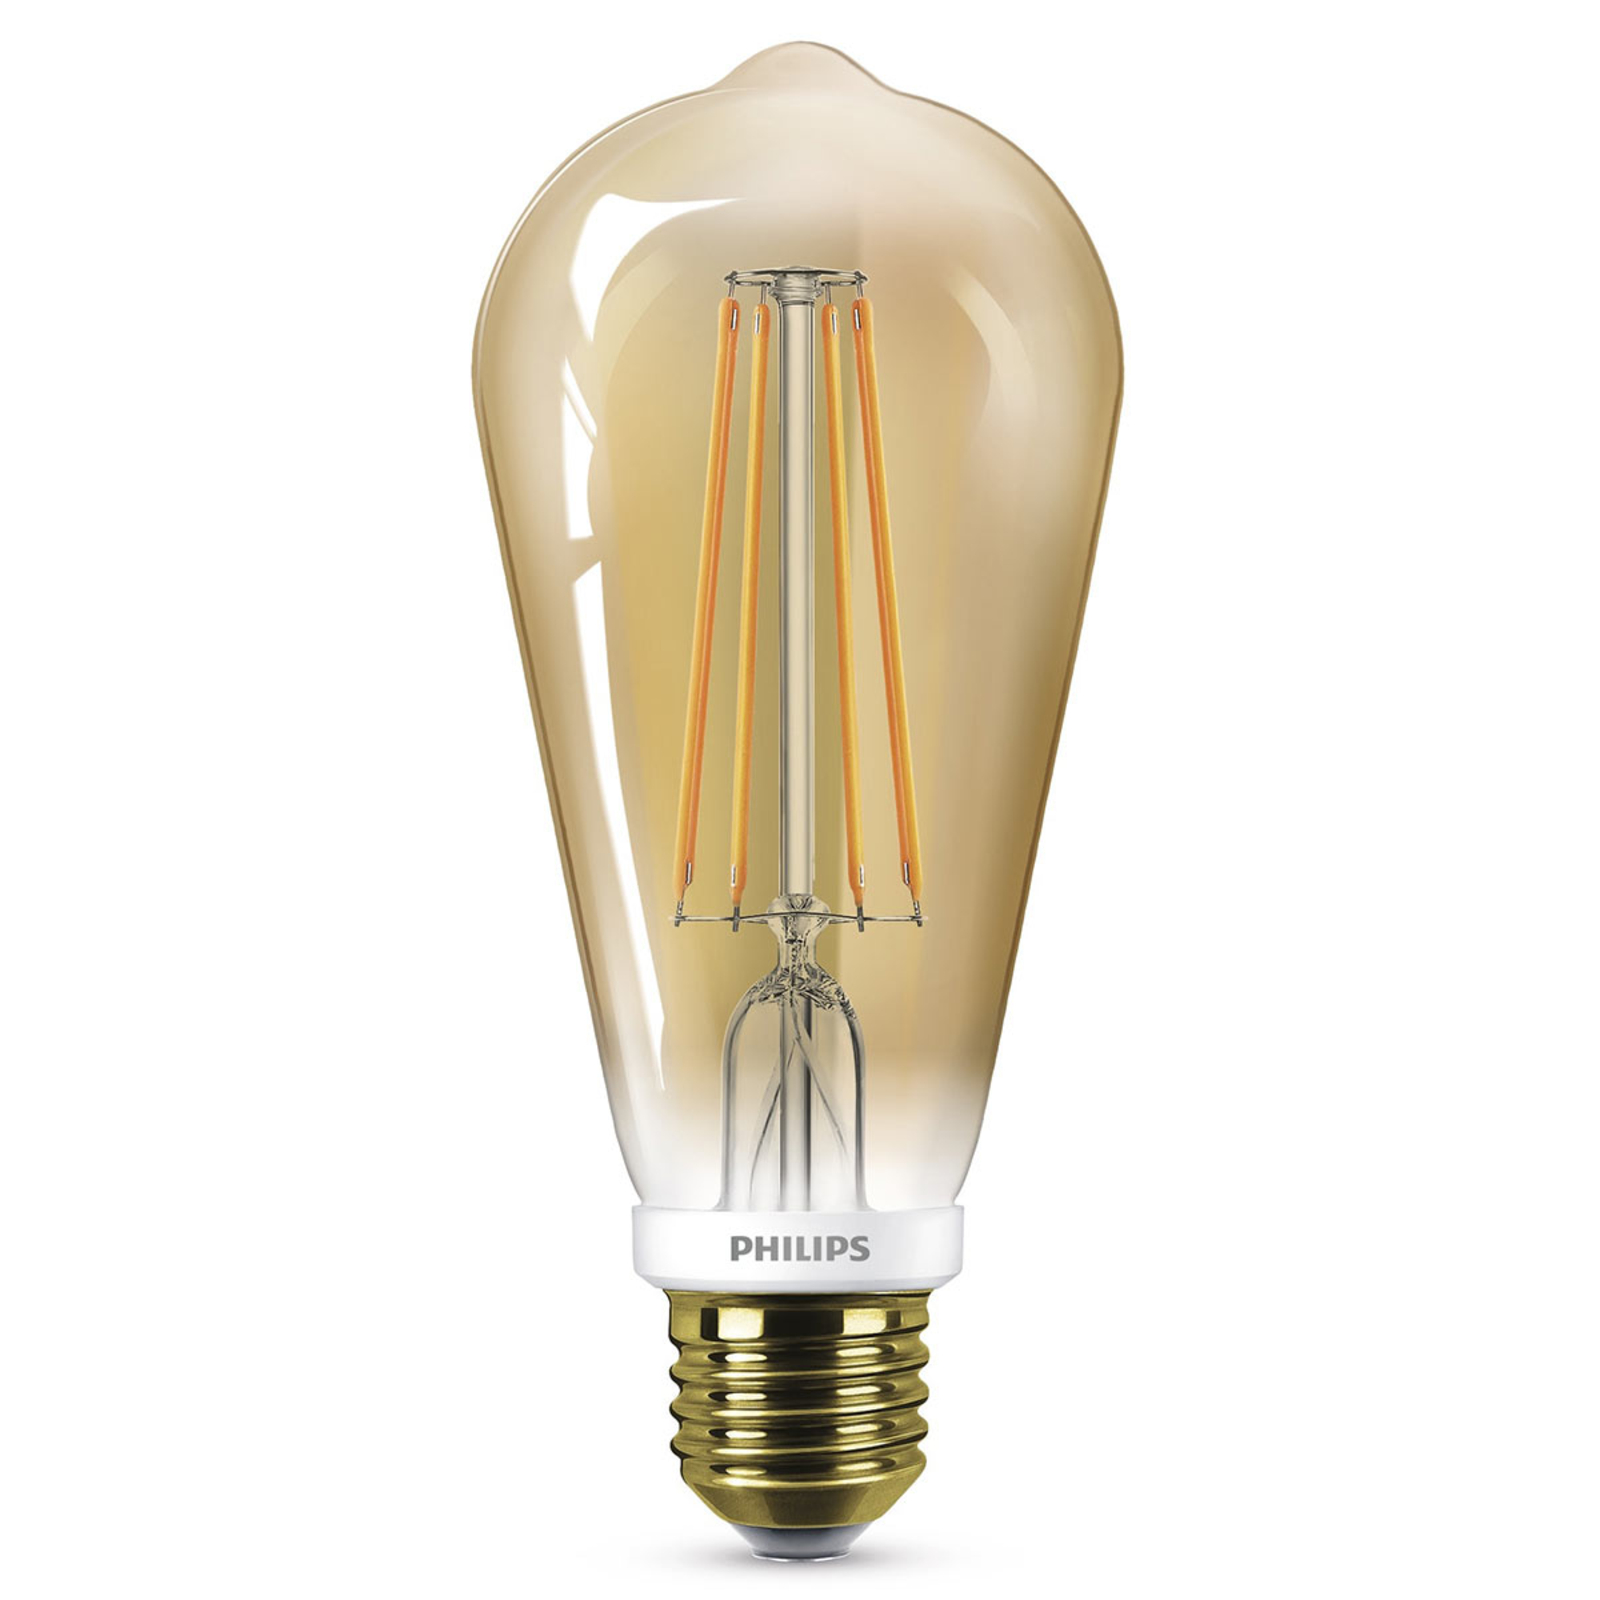 Andrew Halliday Huiskamer Regeneratie Philips LED lamp E27 ST64 5,5W goud, dimbaar | Lampen24.nl